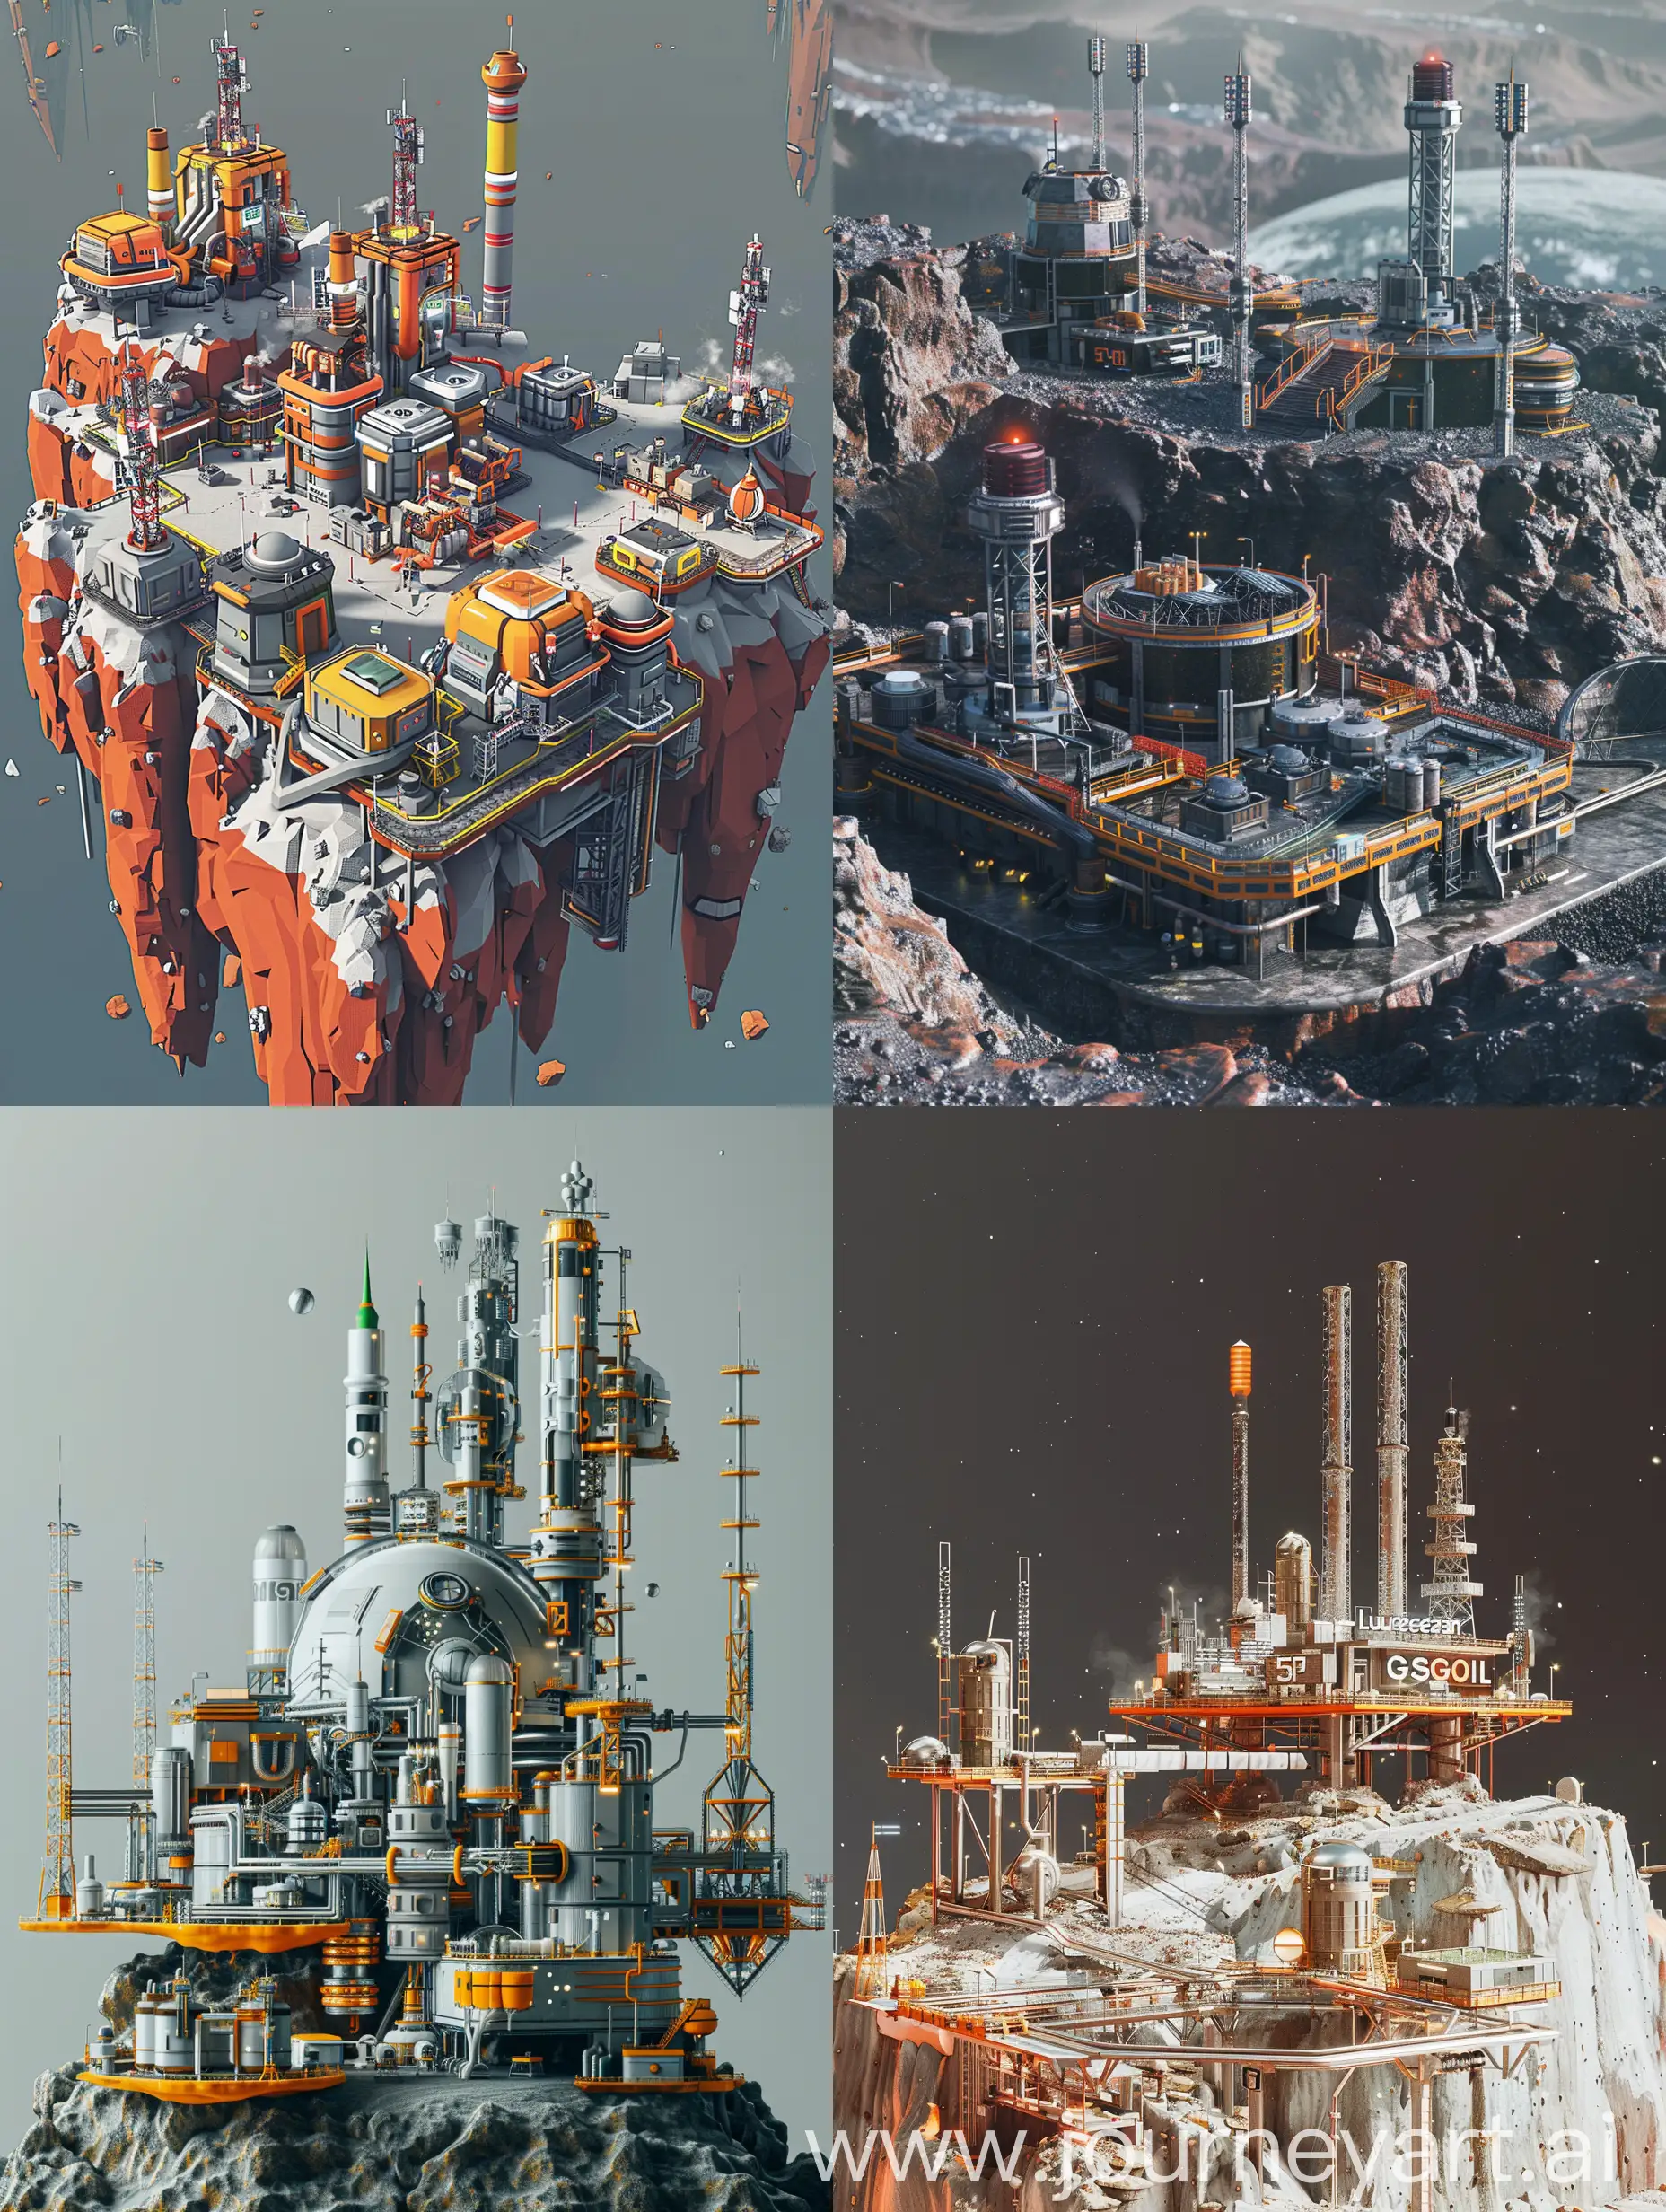 Futuristic-Alien-City-HighTech-Infrastructure-on-a-Rock-Planet